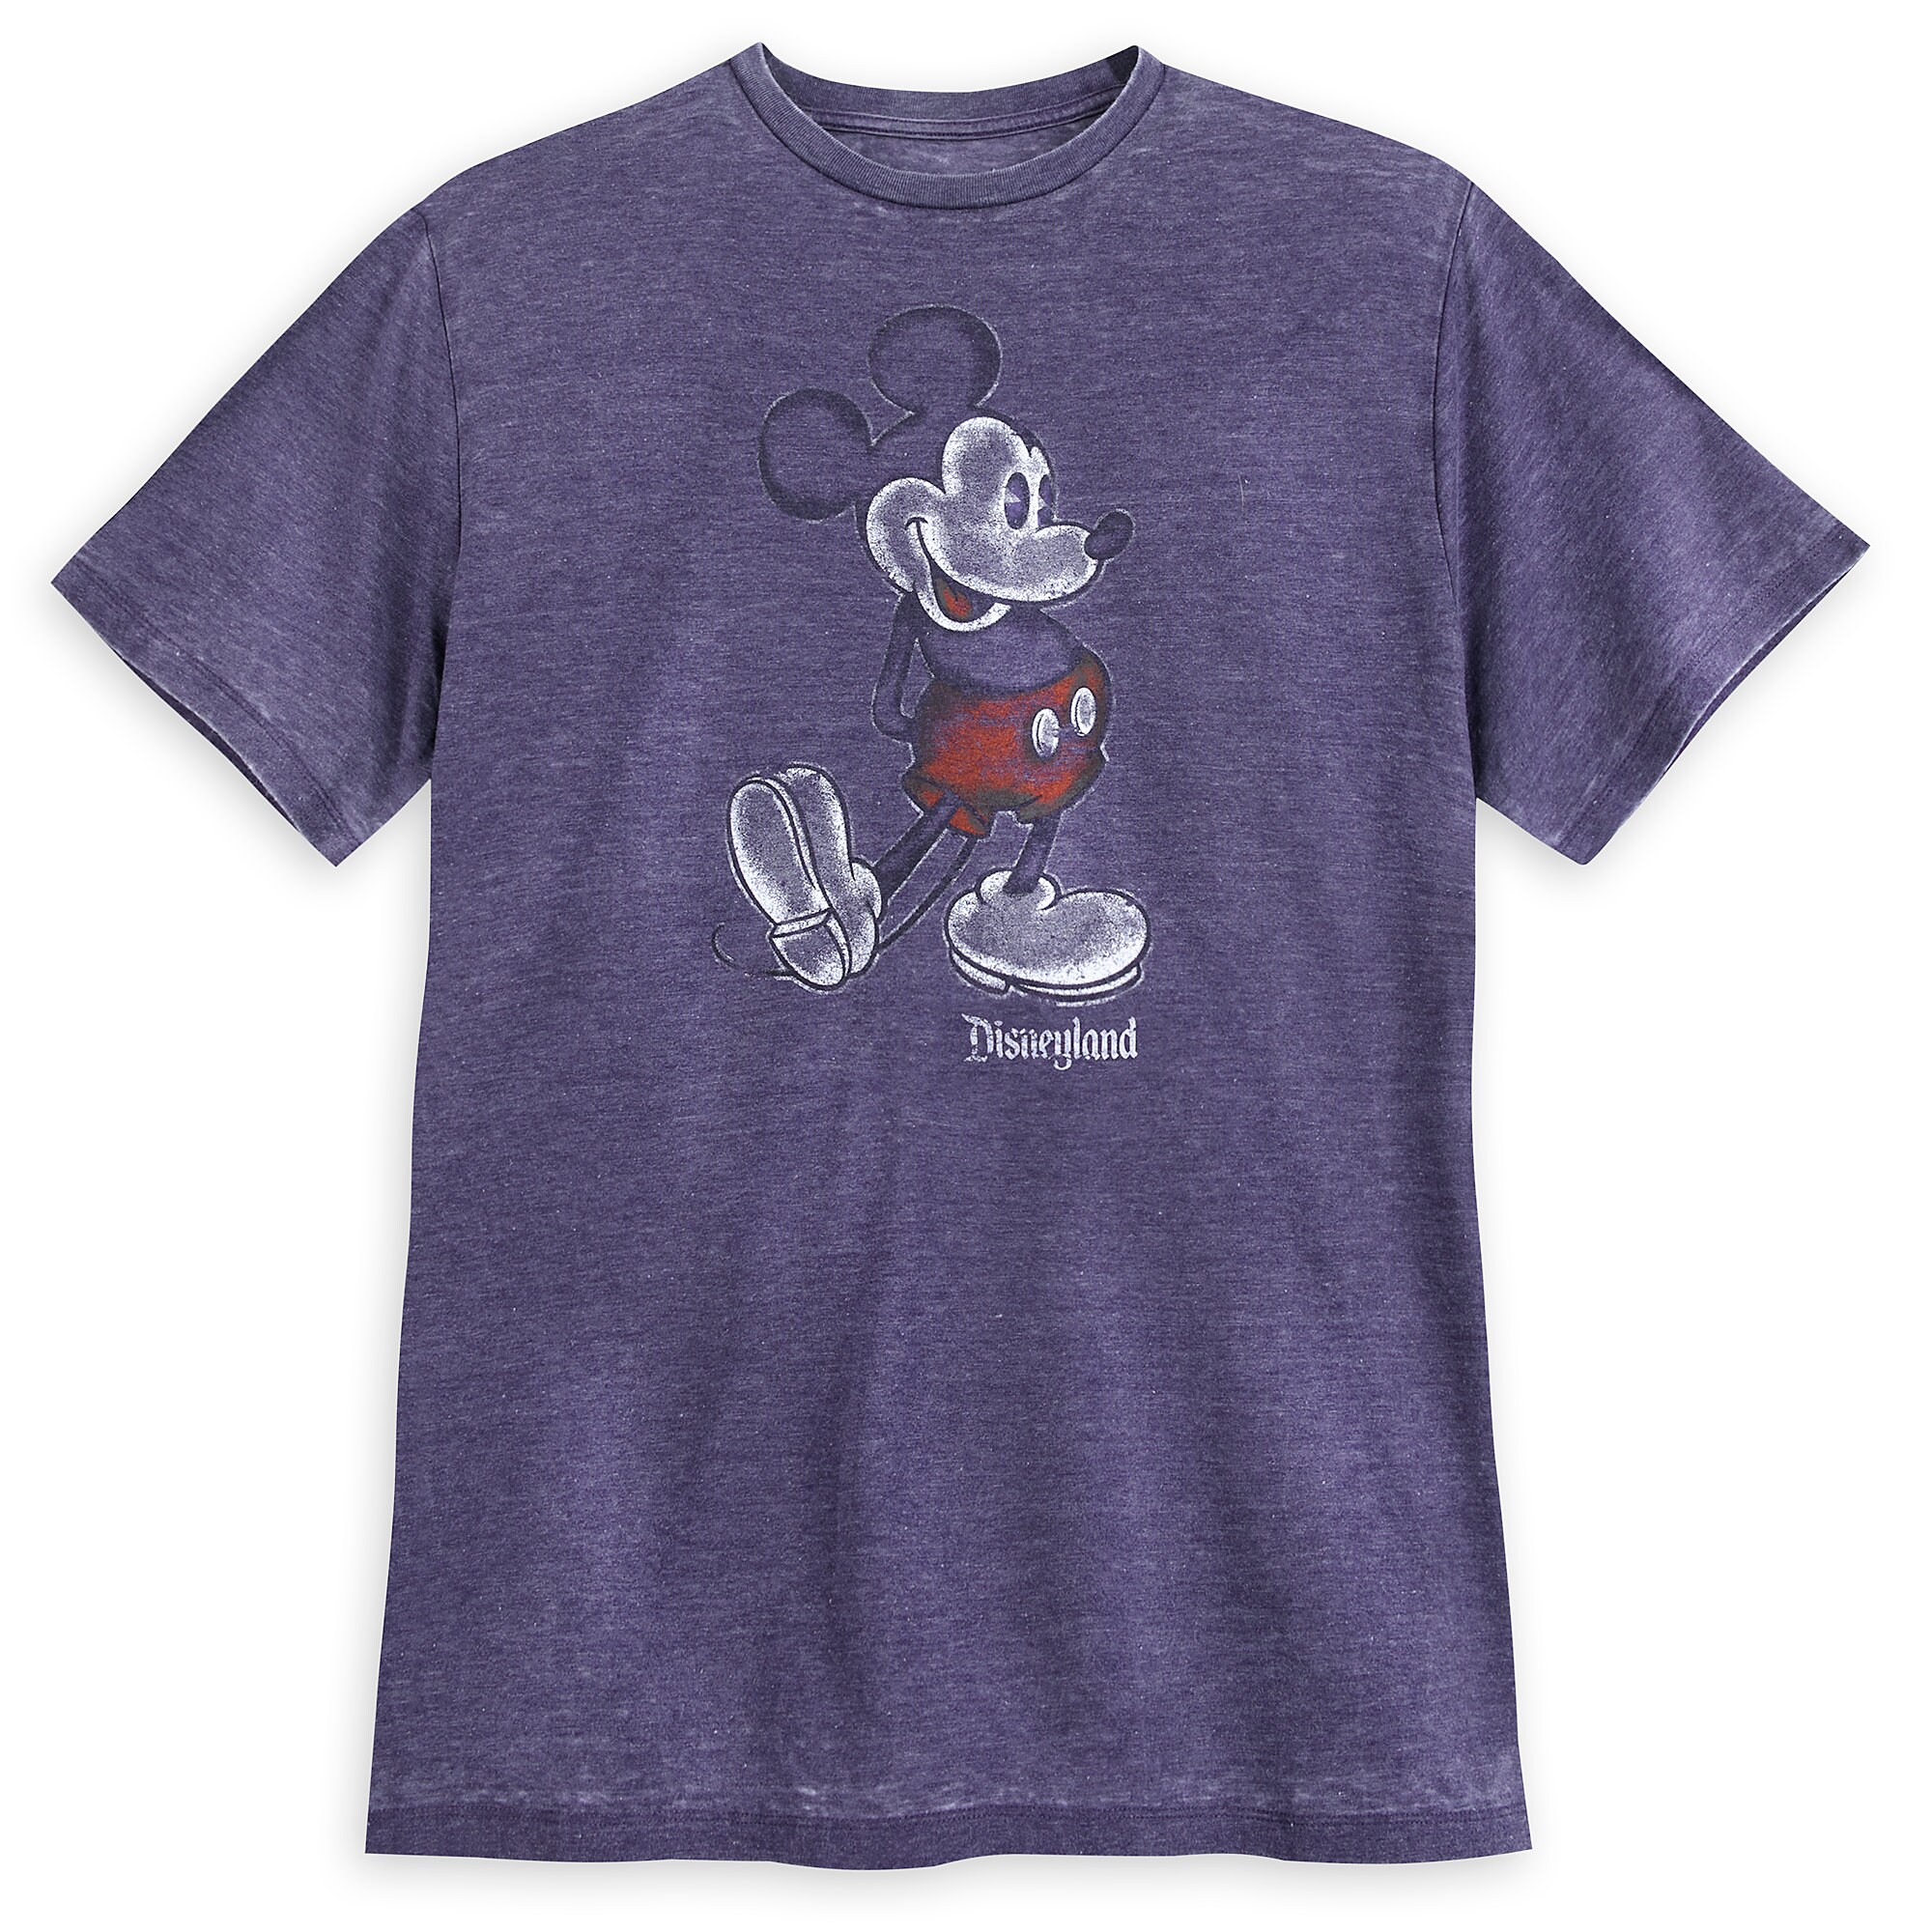 Mickey Mouse Classic T-Shirt for Men - Disneyland - Purple